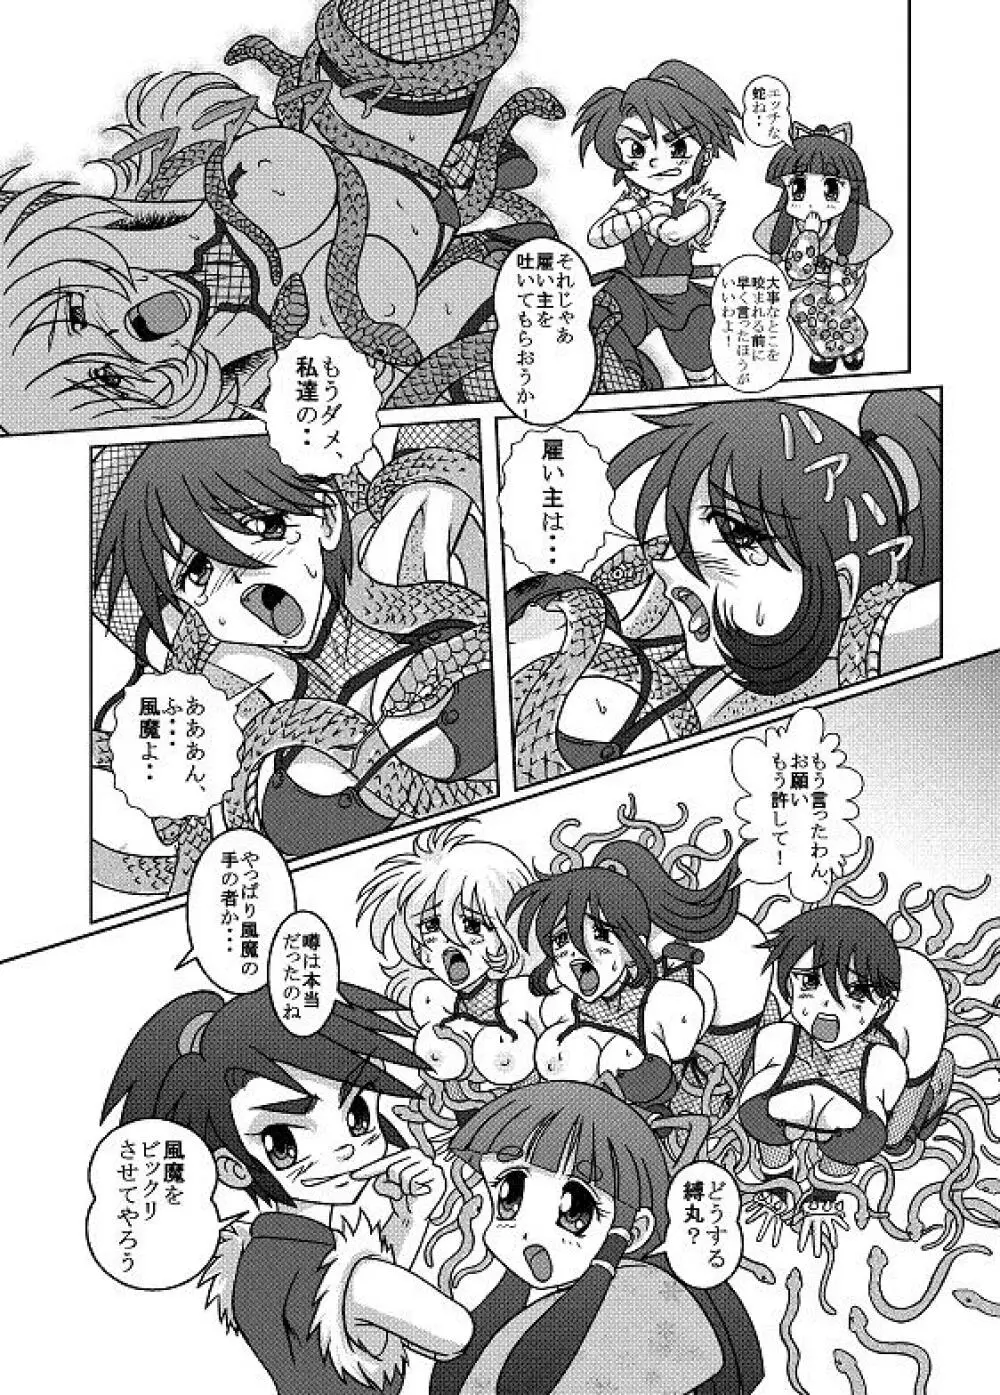 Same-themed manga about kid fighting female ninjas from japanese imageboard. 43ページ